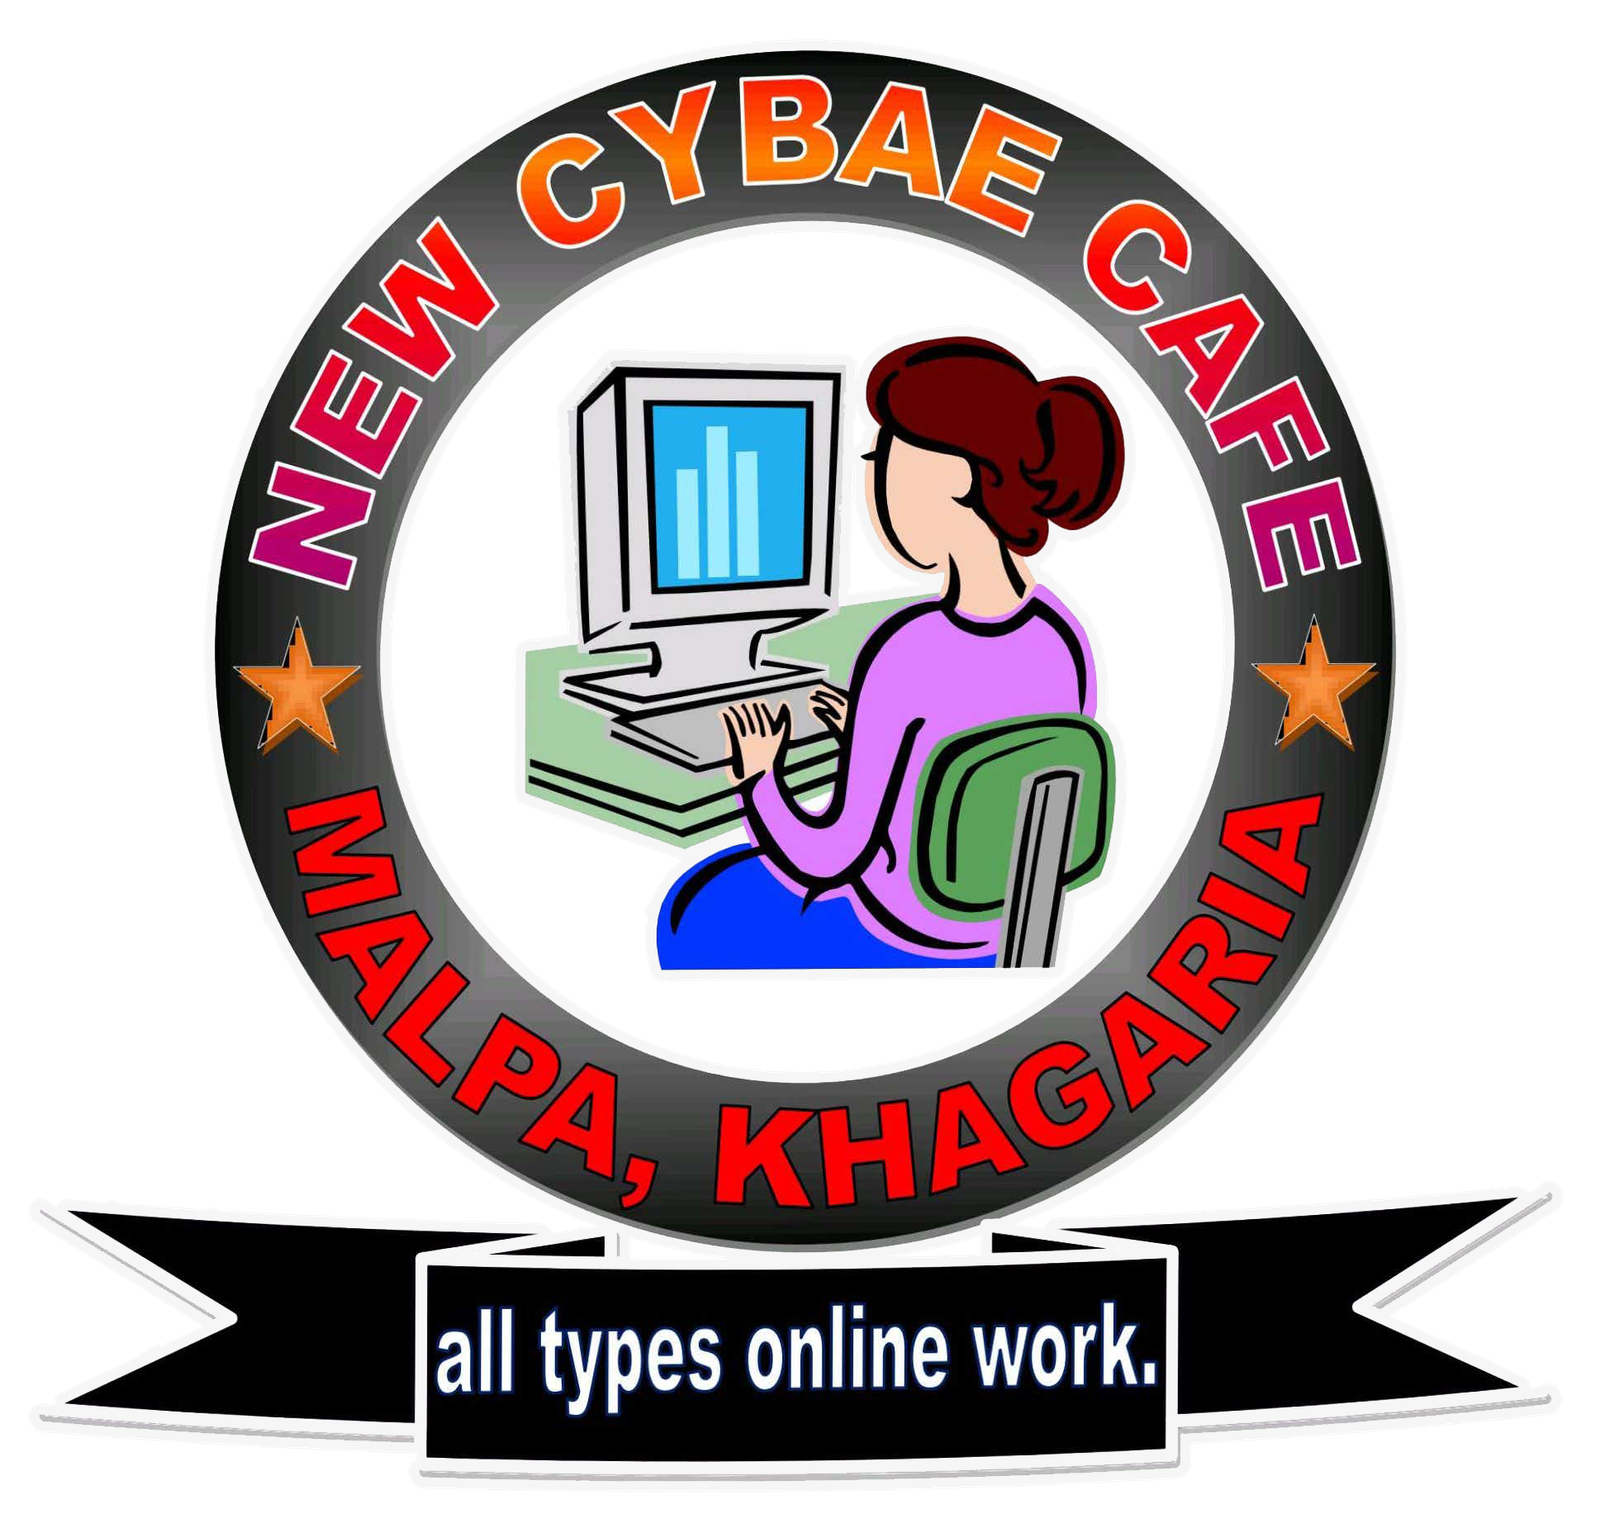 Cyber Cafe Software I Internet Cafe I Gaming Center and Cyber Cafe Software